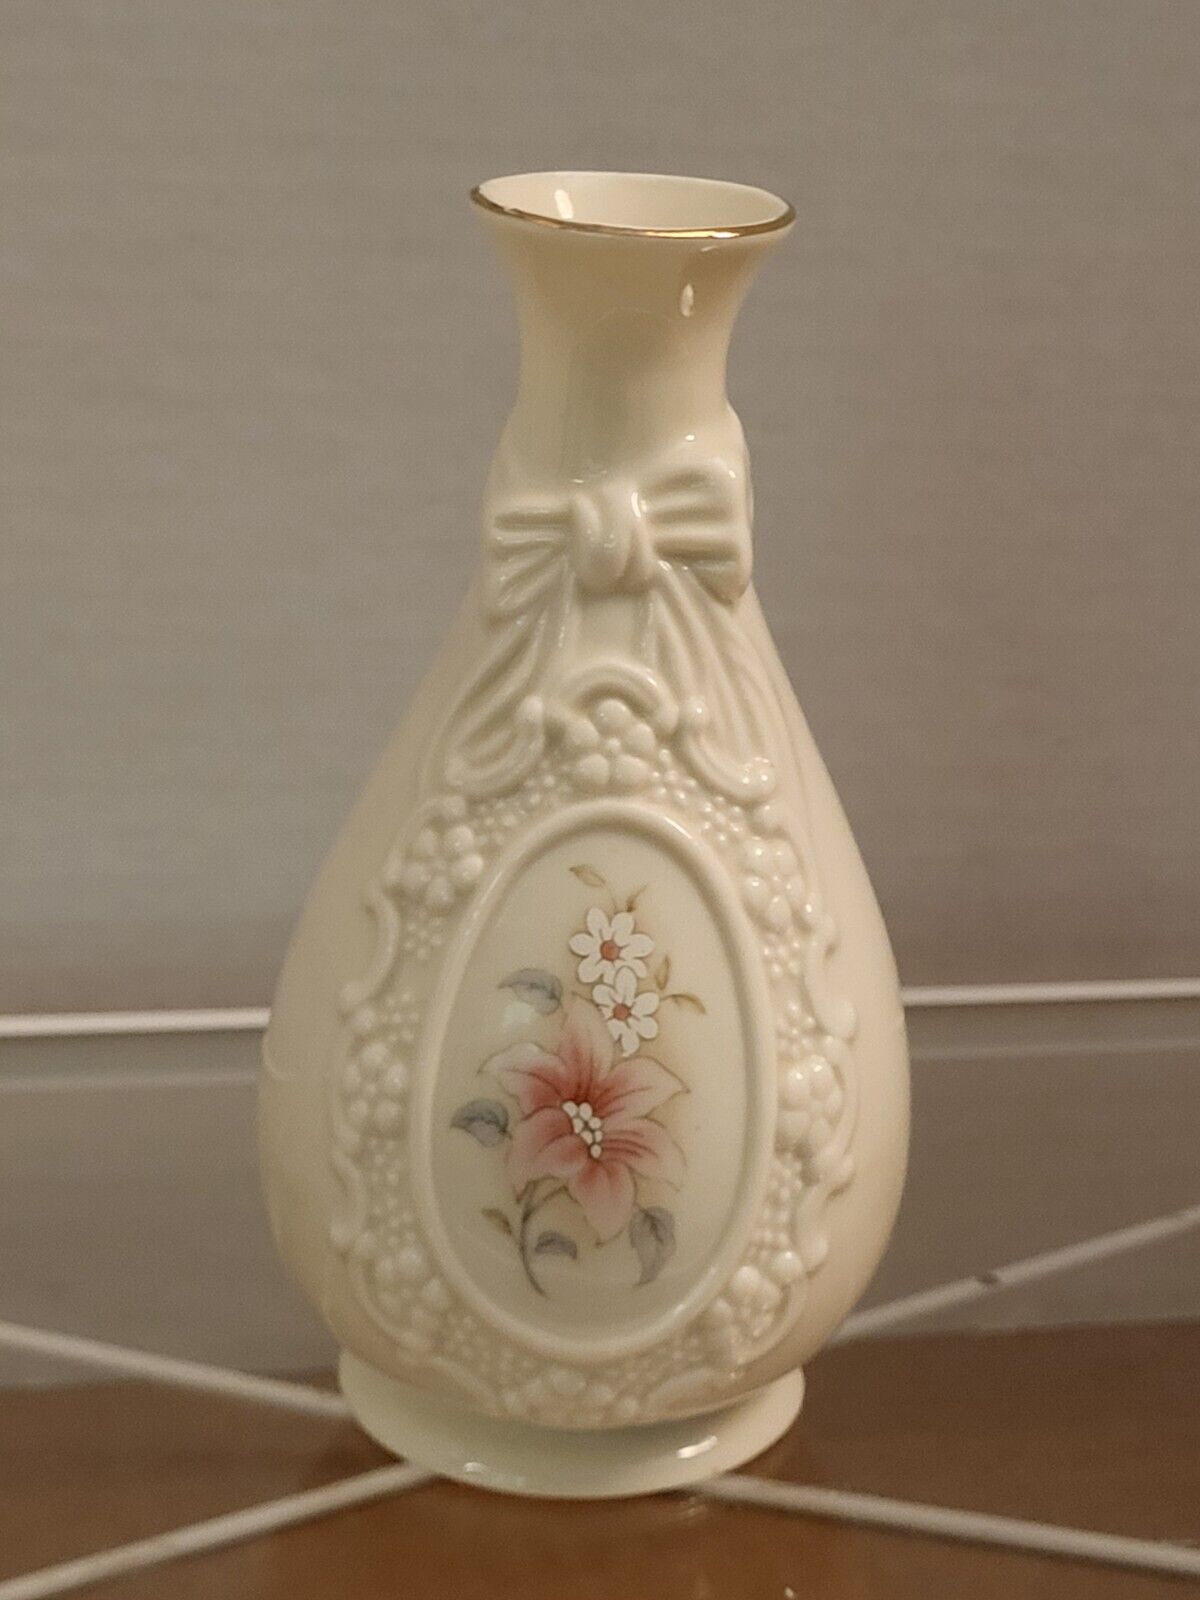 The Carmeo Ribbon Vase by Royal Heritage